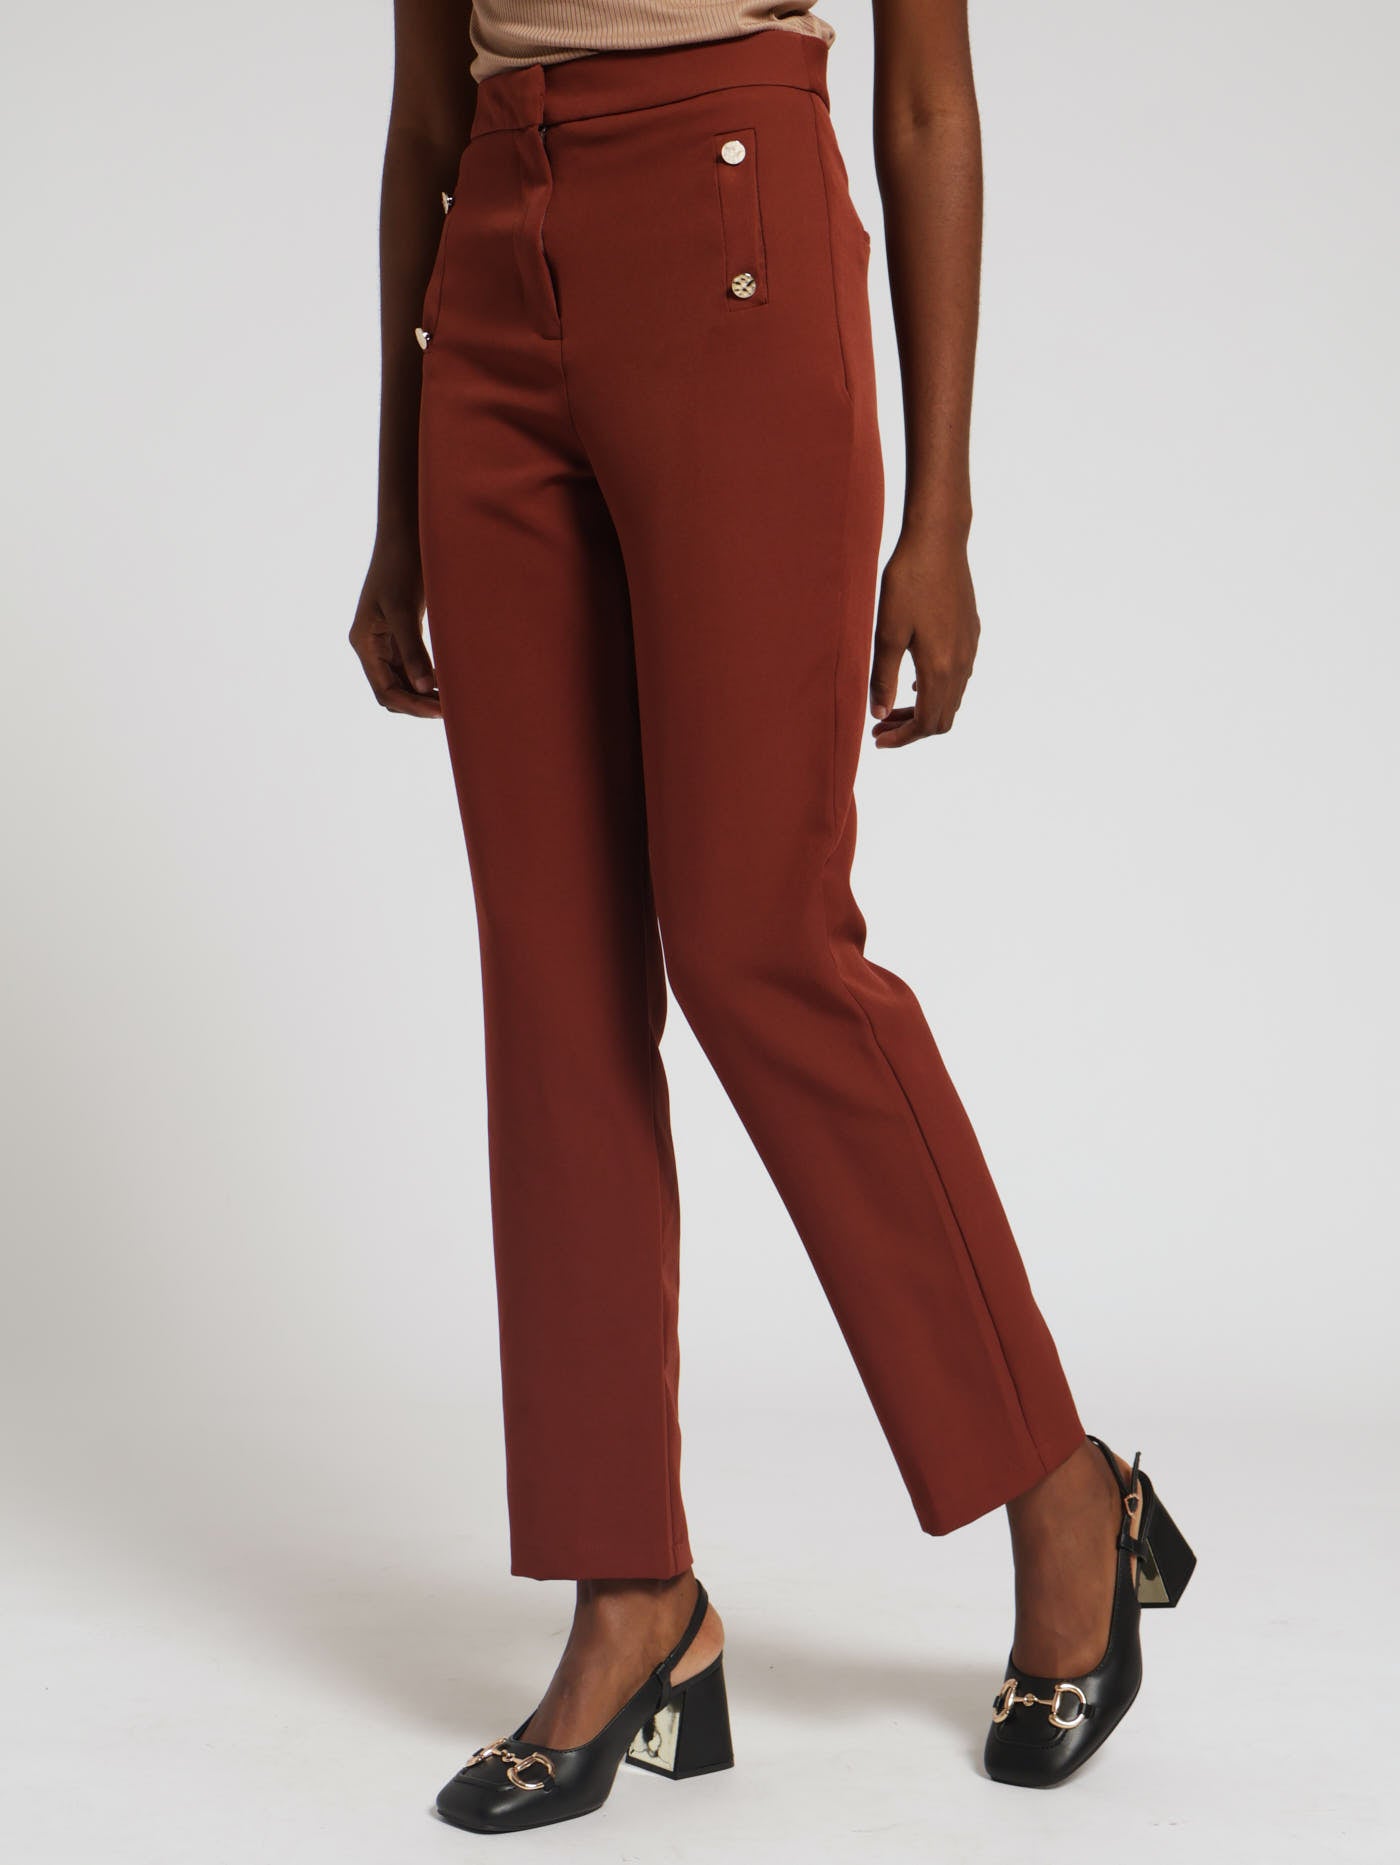 Maroon Blazer Matching Shirt and Pant Ideas | Maroon Blazer Combination Men  - TiptopGents